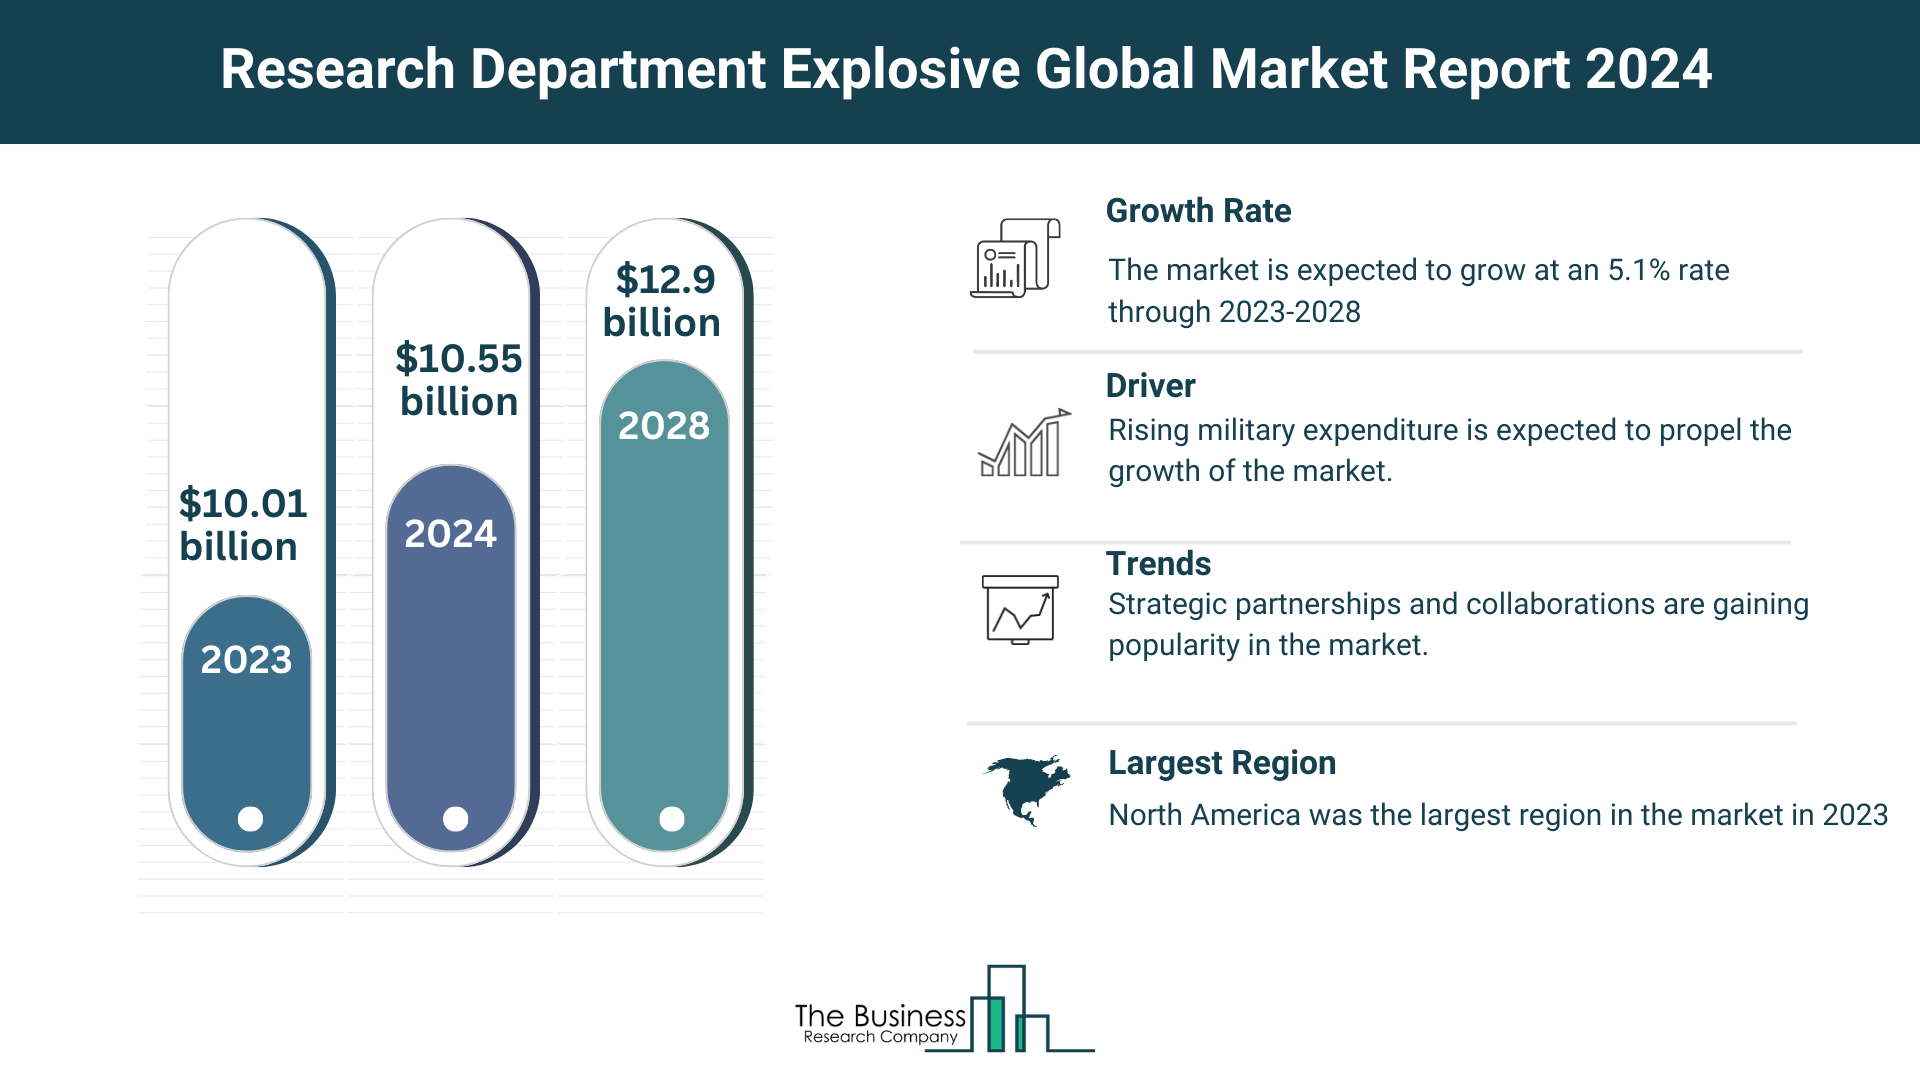 Global Research Department Explosive (RDX) Market